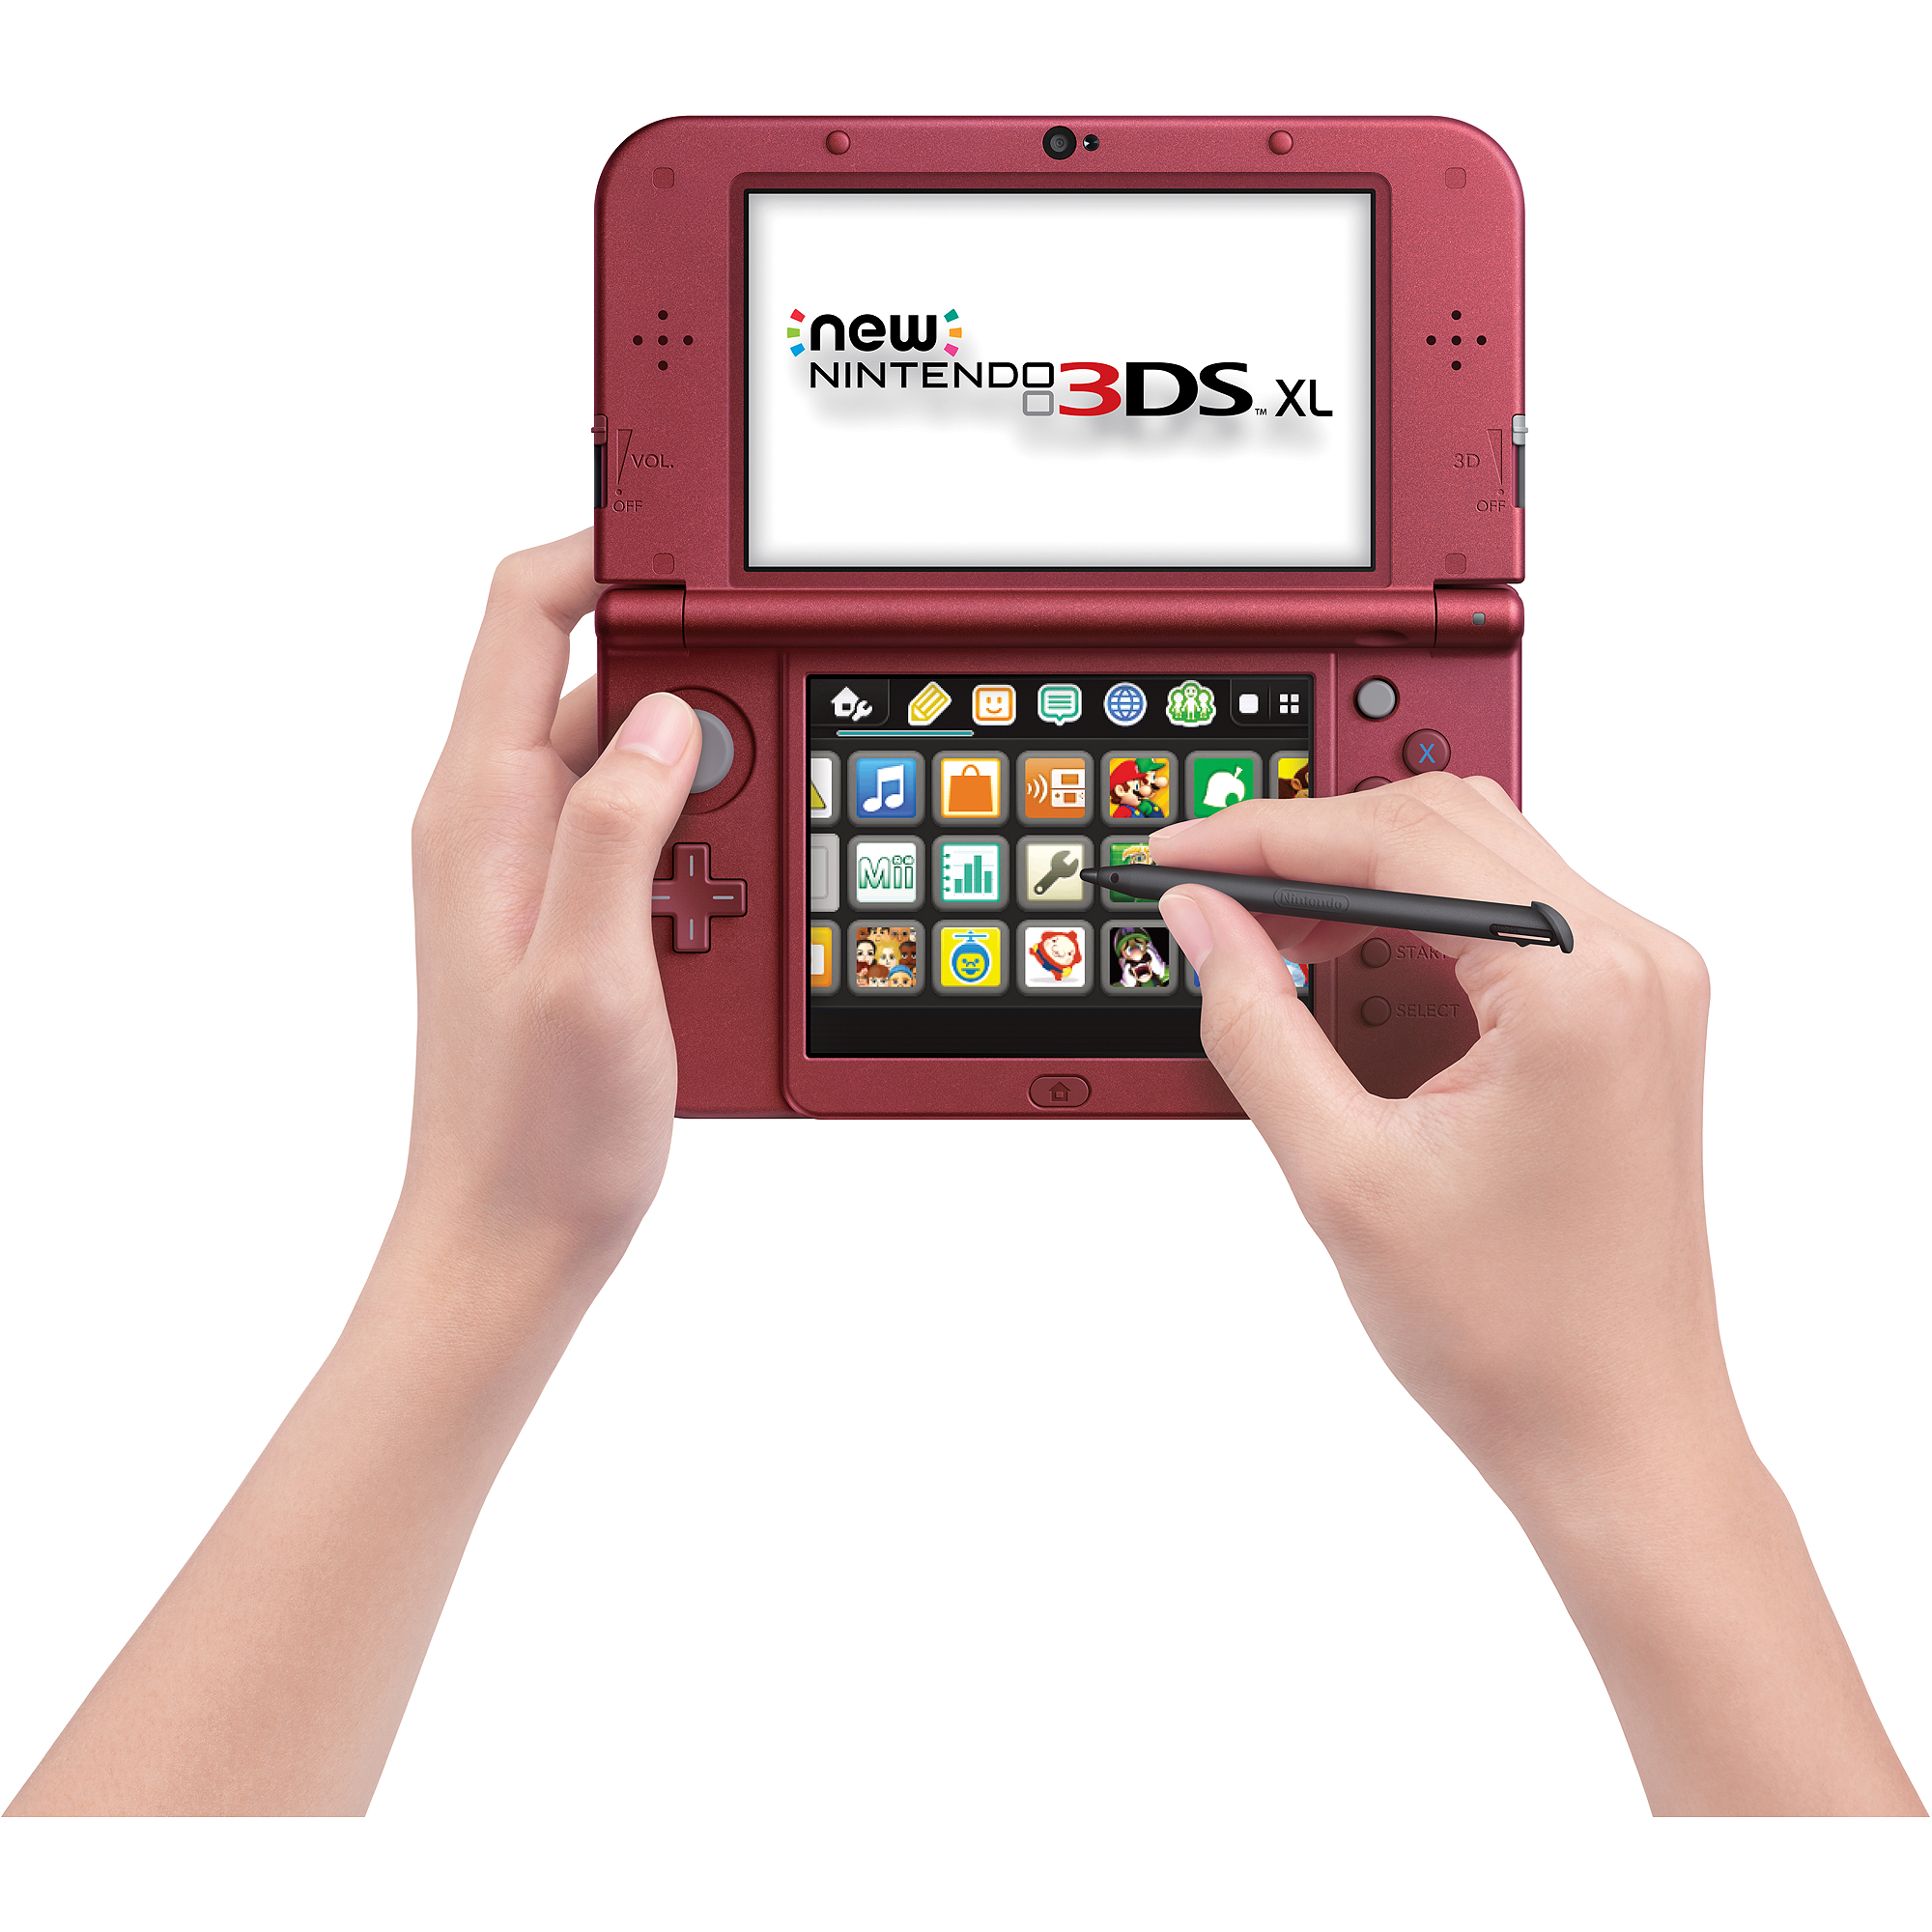 Nintendo 3DS XL Handheld, Red - image 5 of 14